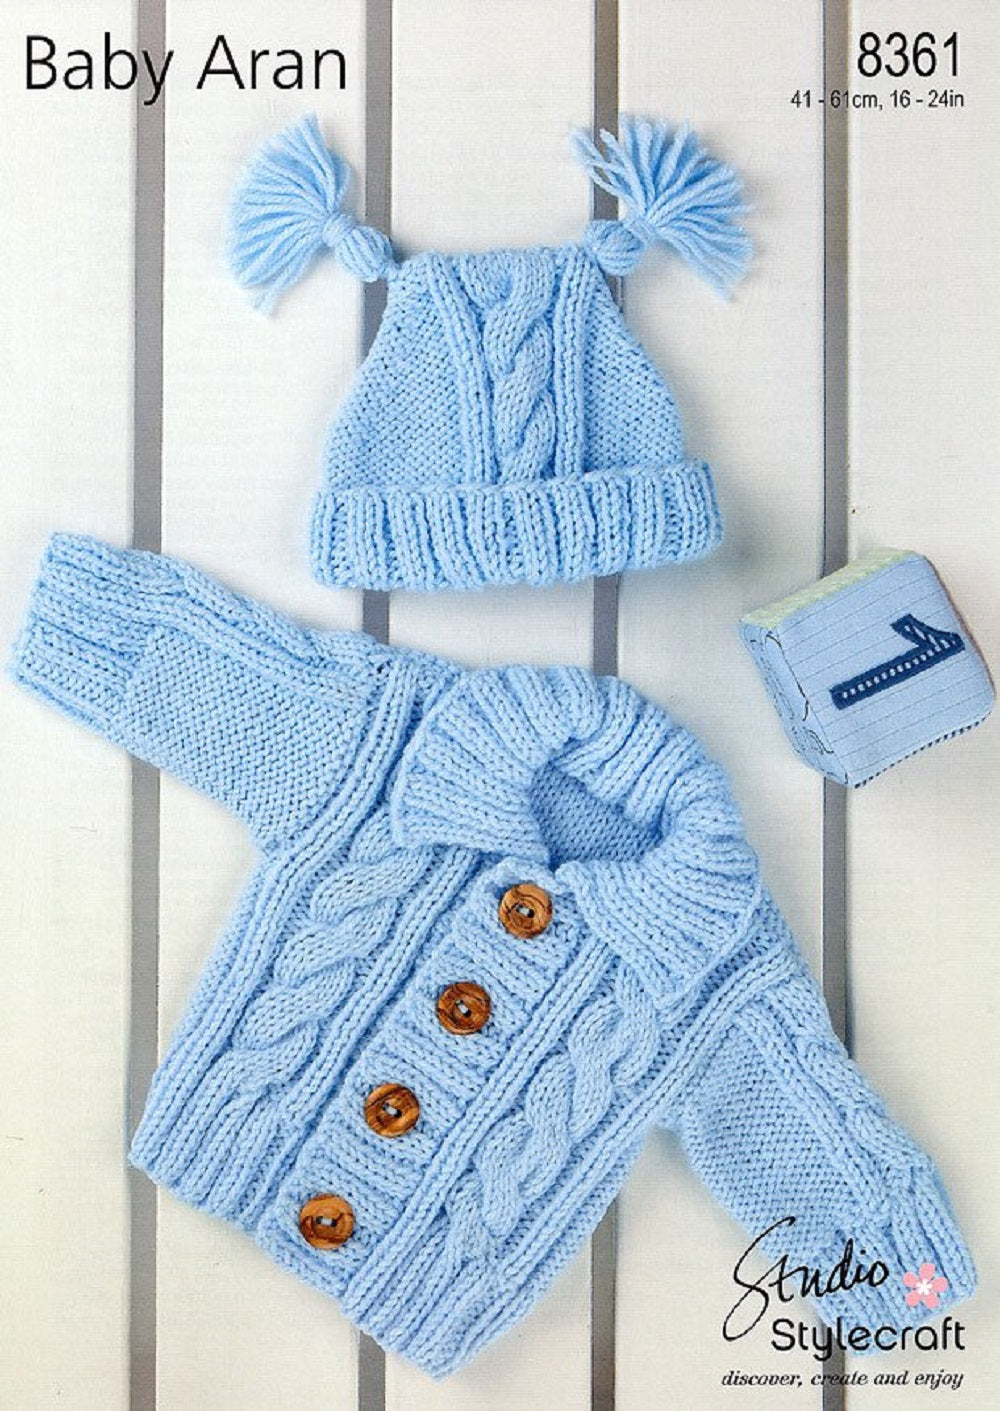 Stylecraft 8361 Babies Cardigan Hat Aran Knitting Pattern